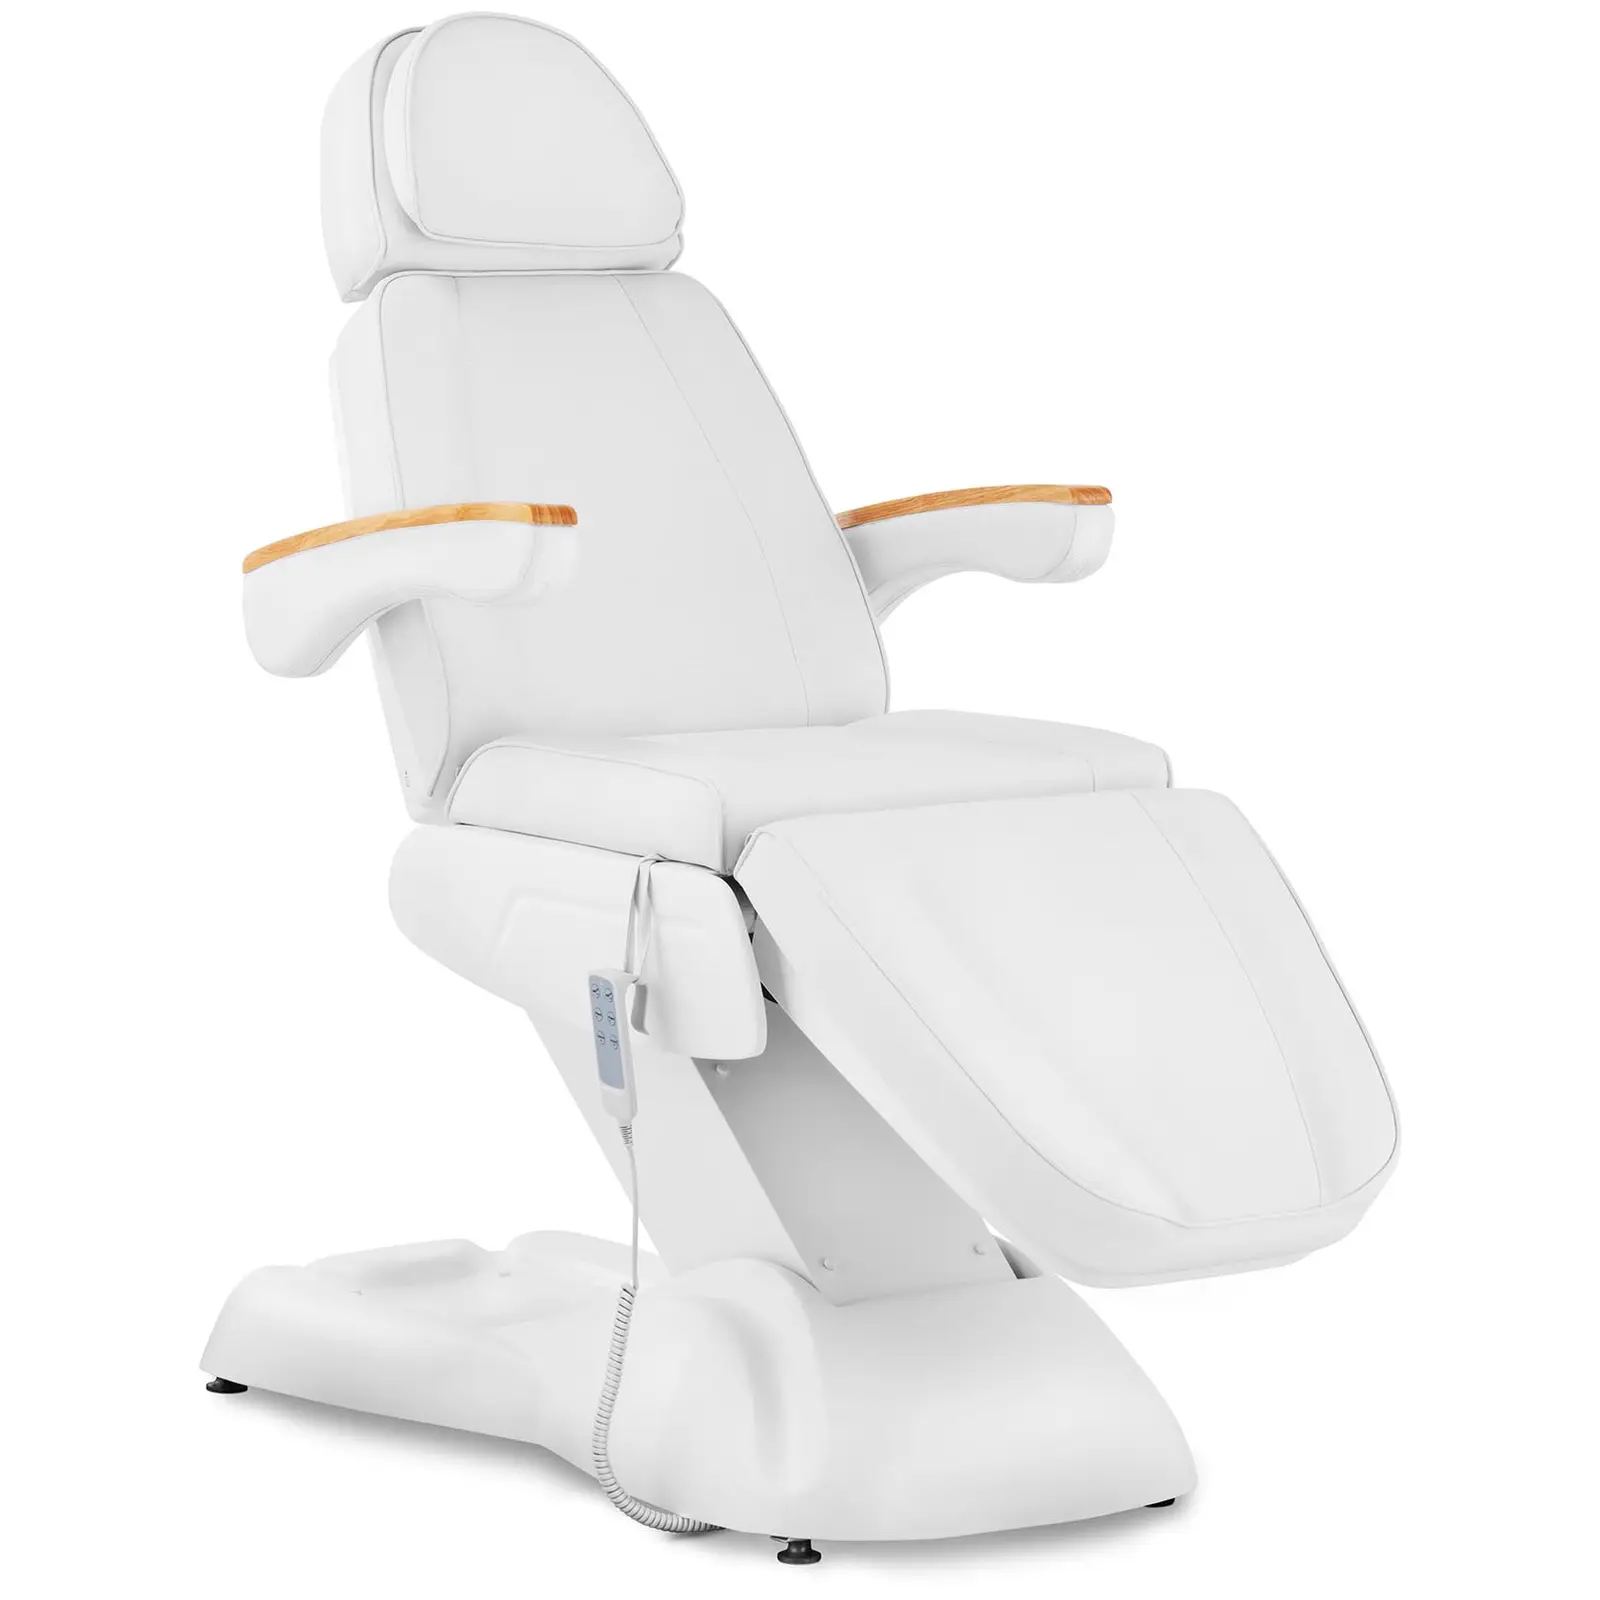 Pedicure Chair - 200 W - 150 kg - White